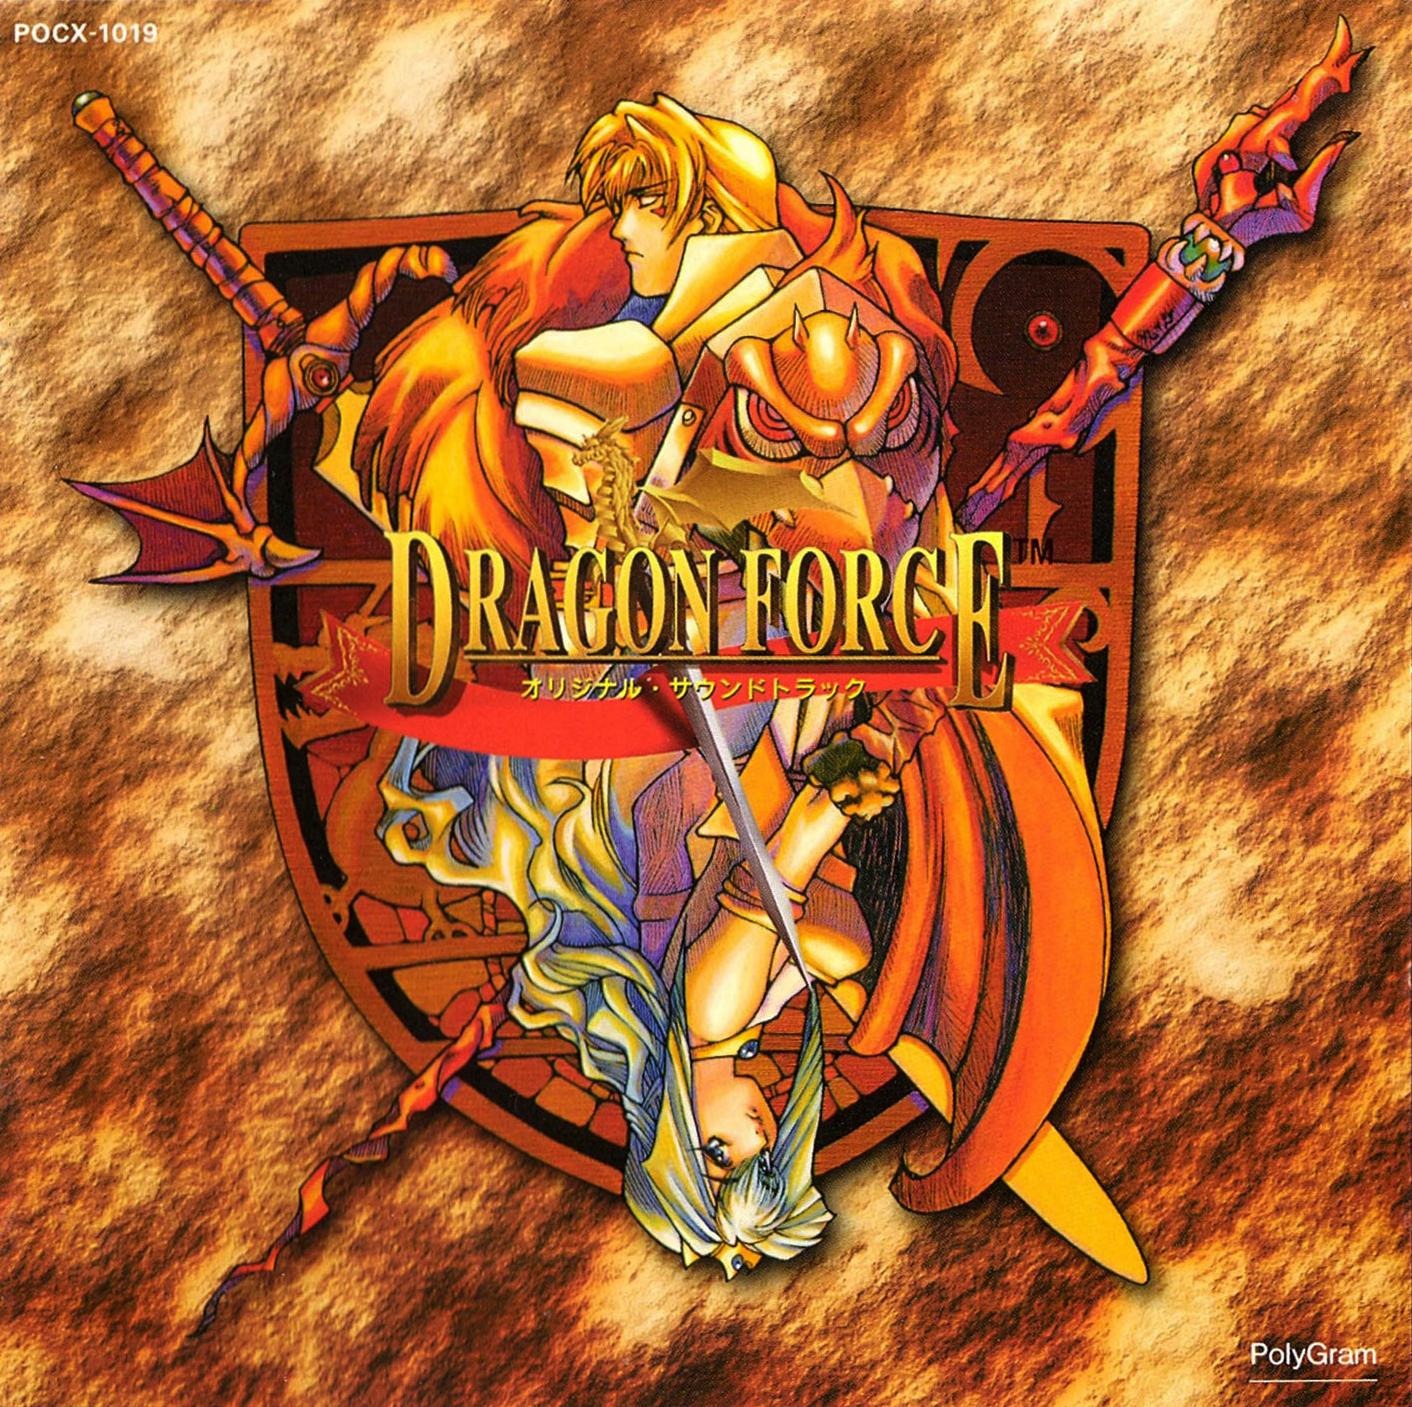 Dragon Force Original Soundtrack - Sega Retro